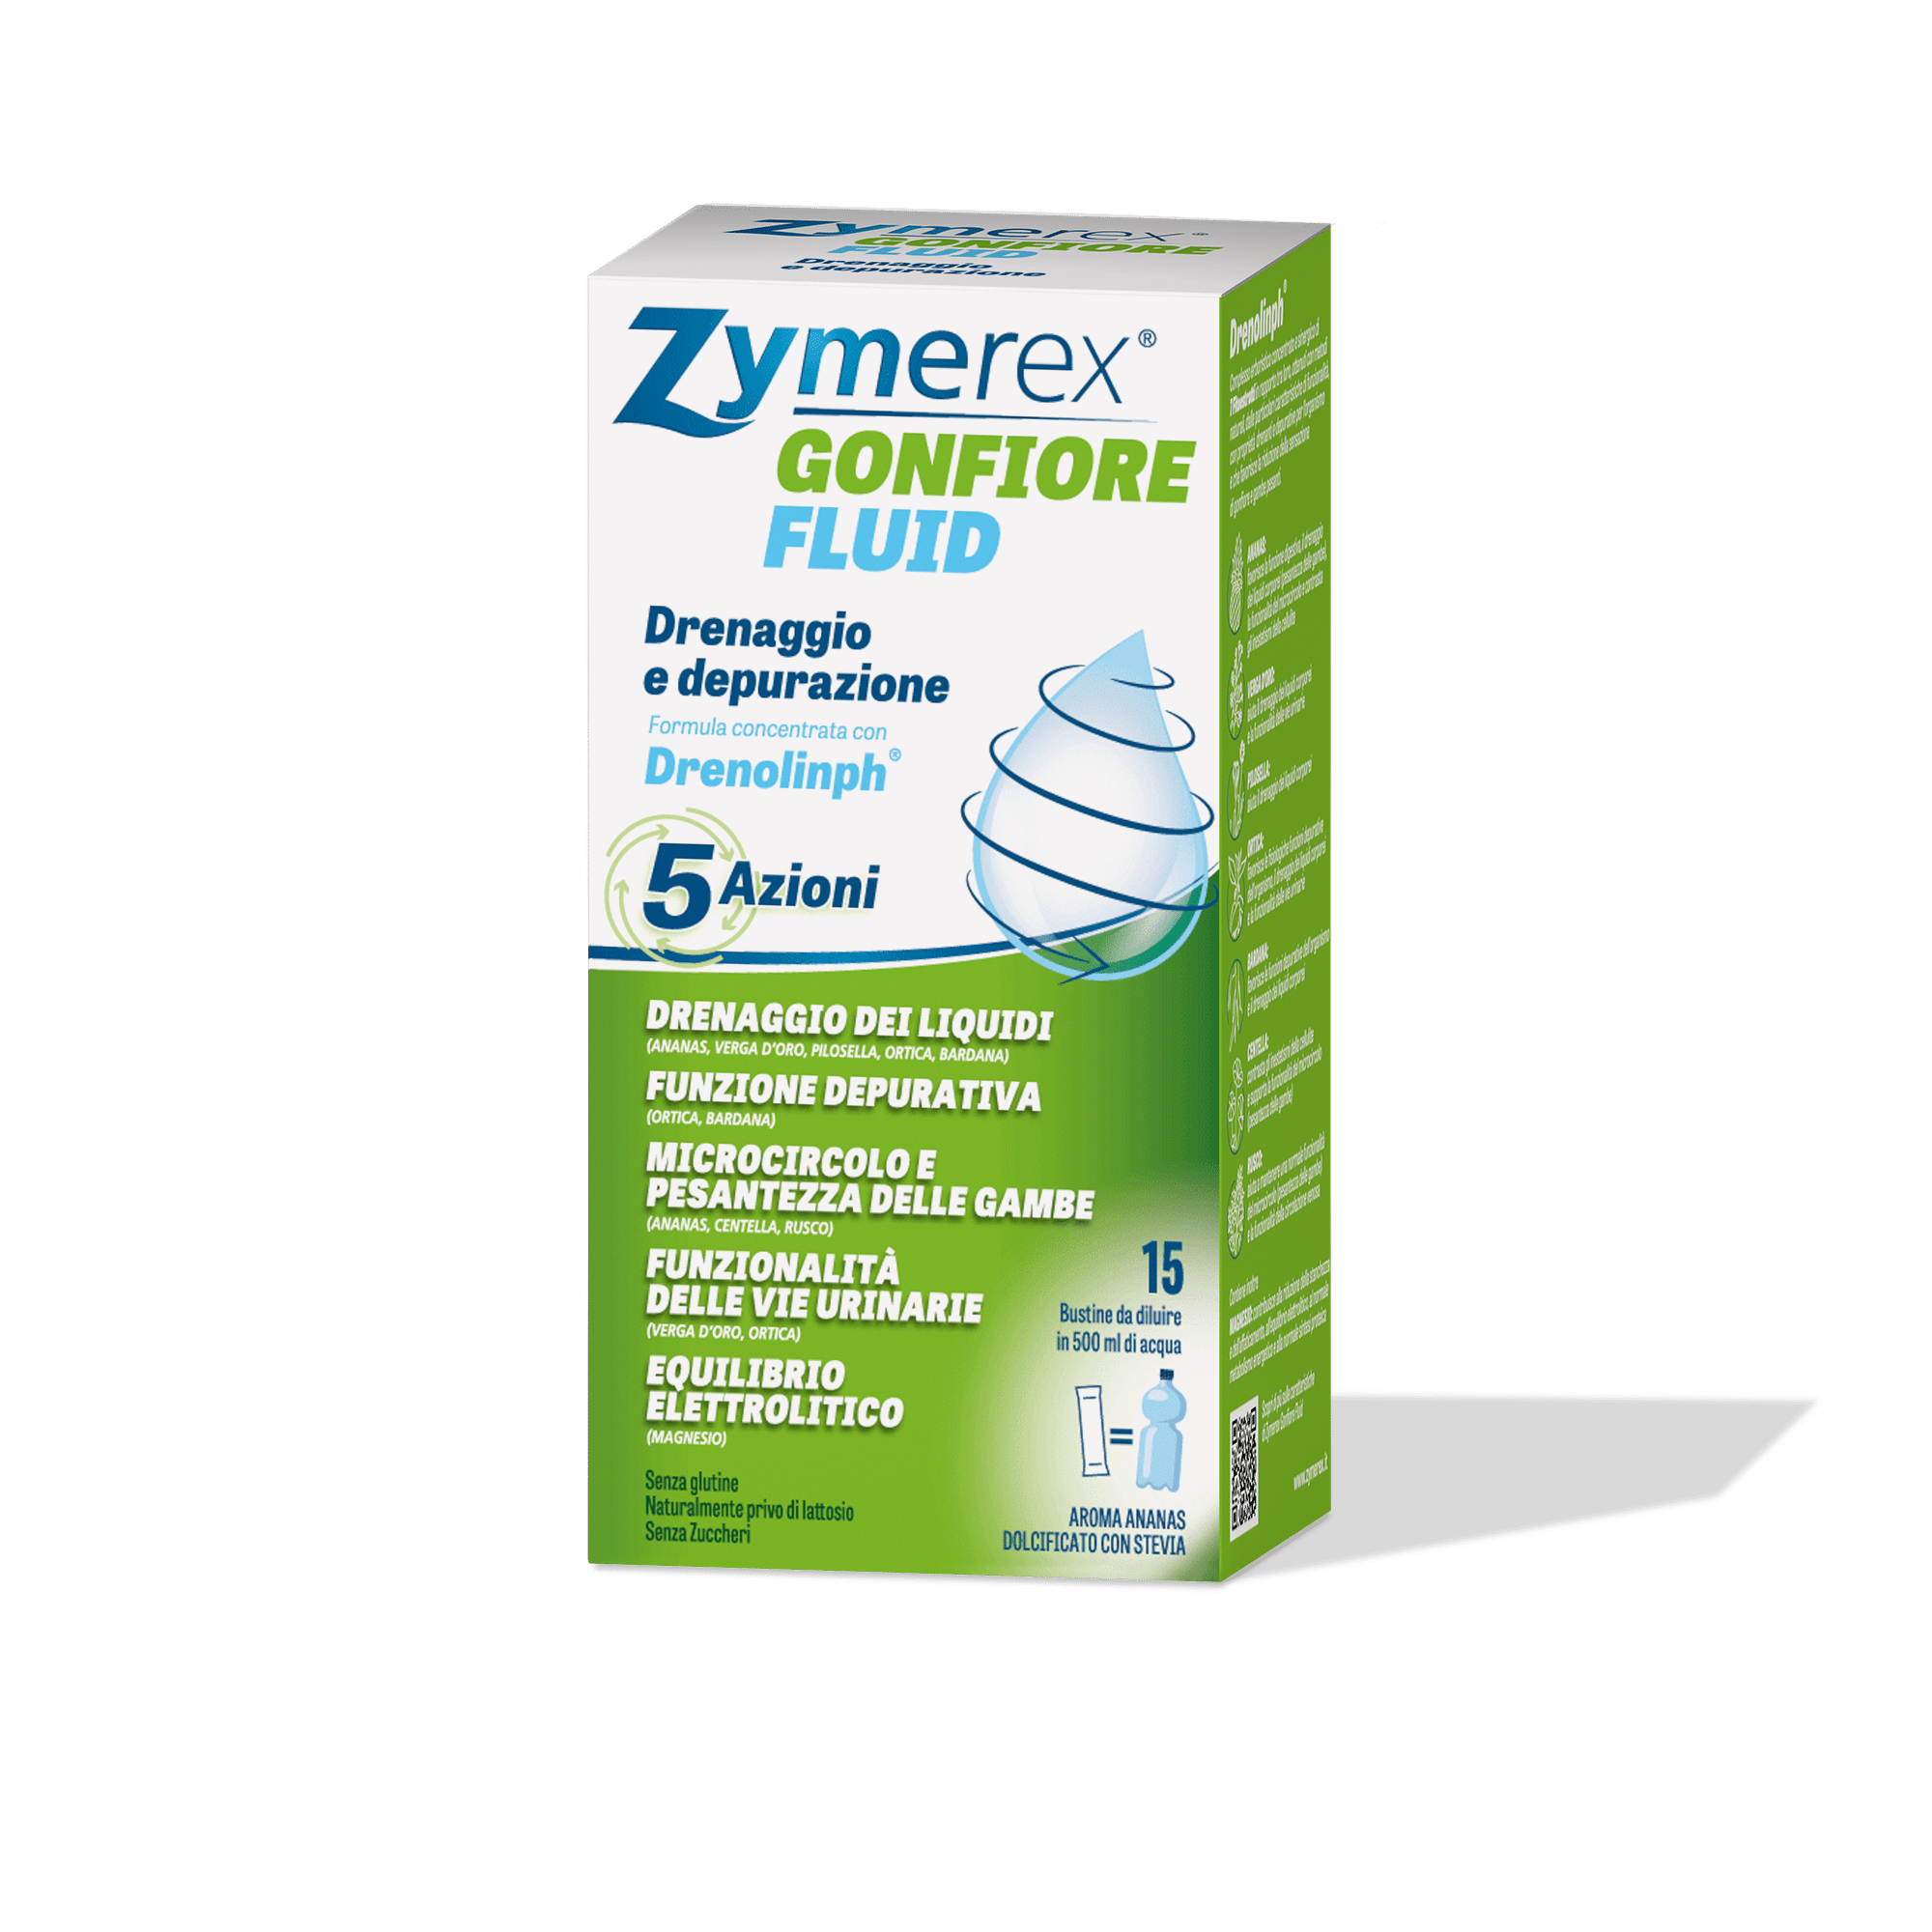 zymerex gonfiore fluid confezione